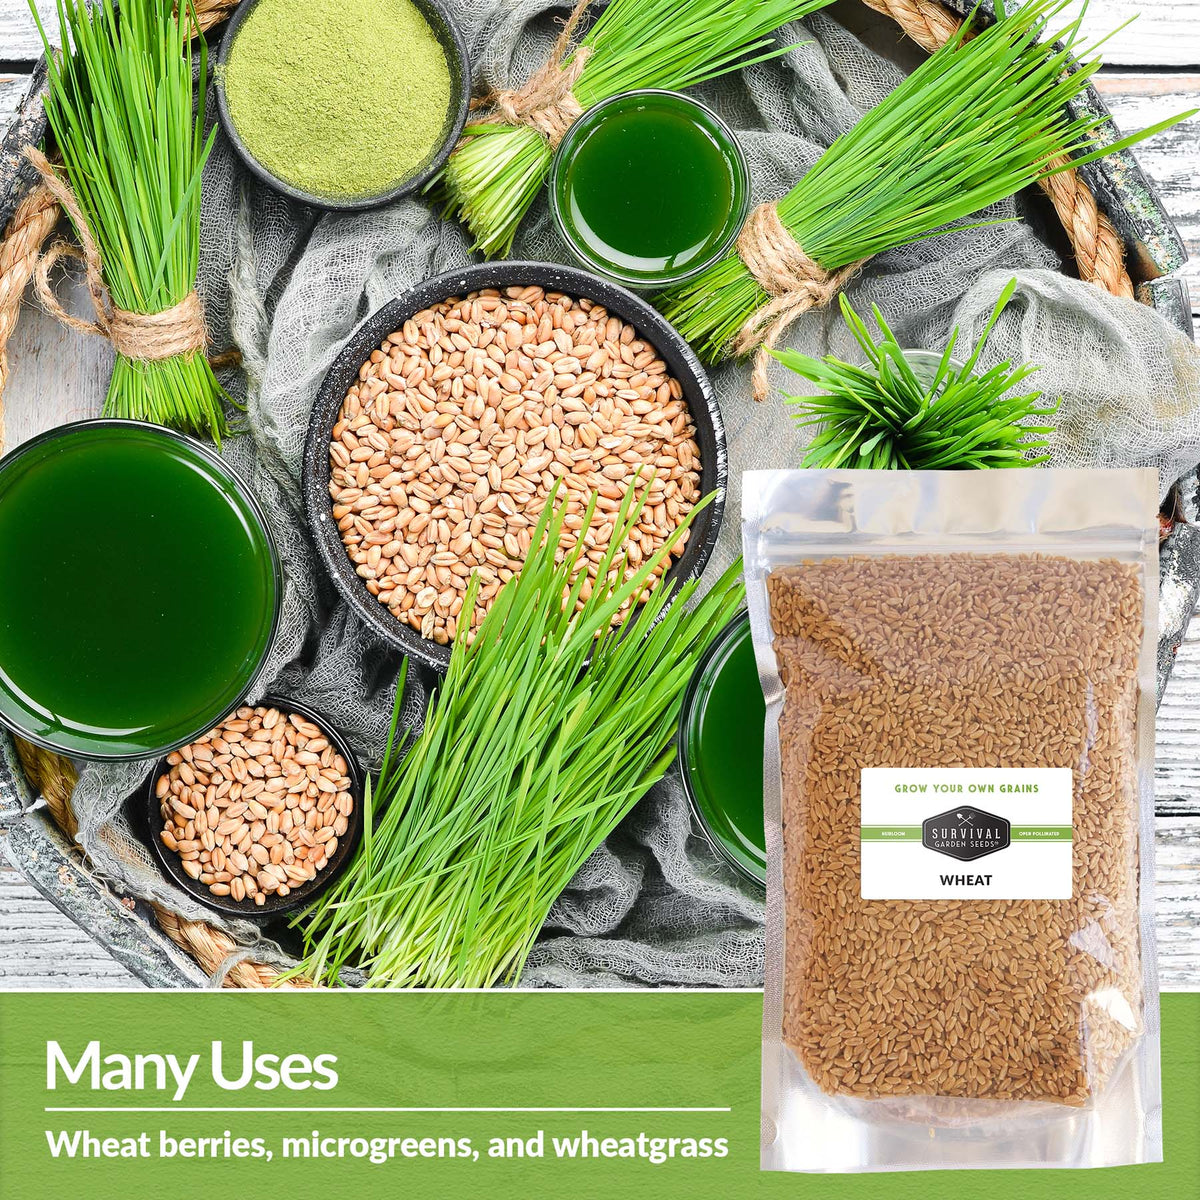 Wheat has many uses - wheat berries, microgreens and wheatgrass